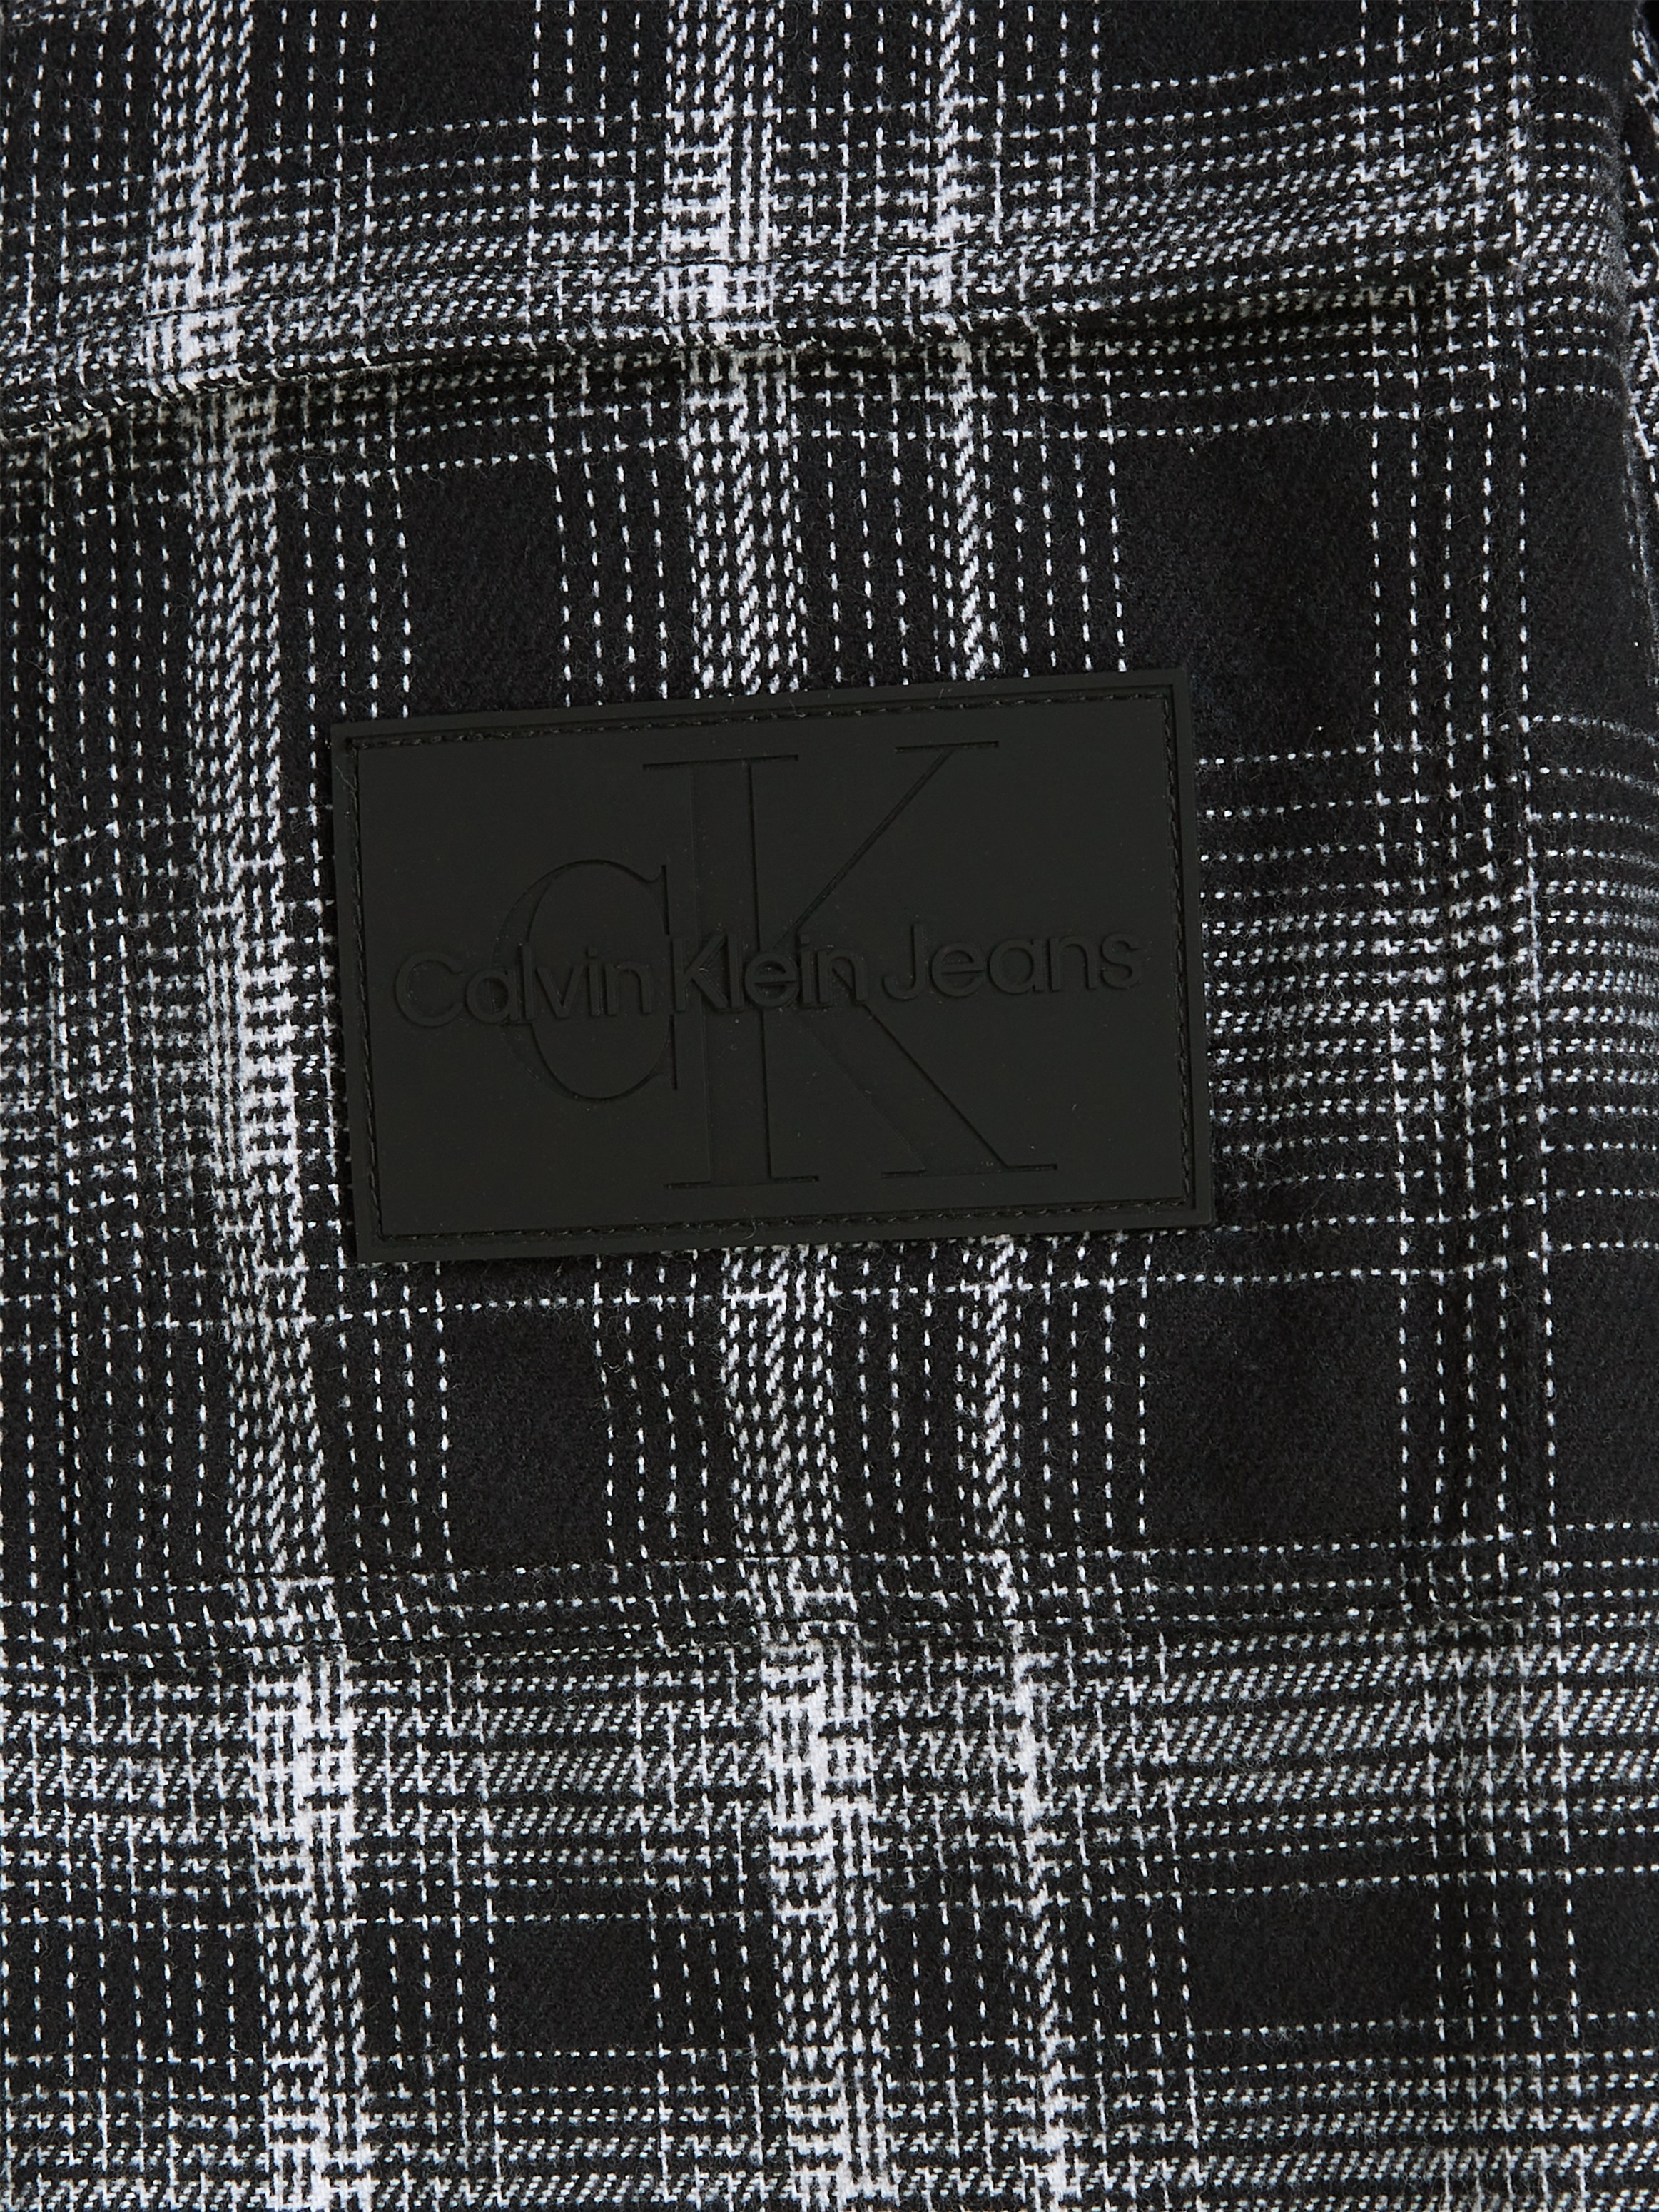 Calvin Klein Jeans Langarmhemd »CHECK SHIRT«